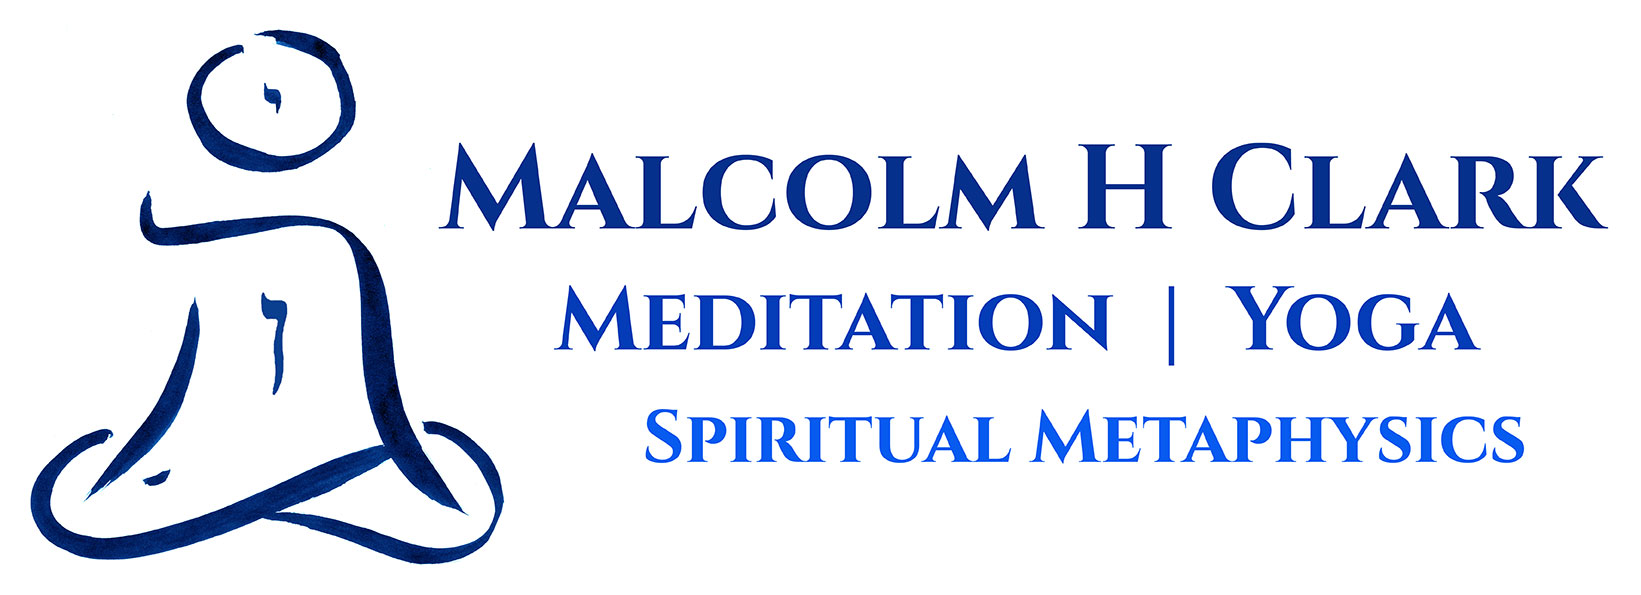 Malcolm H Clark | Meditation - Yoga - Spiritual Metaphysics